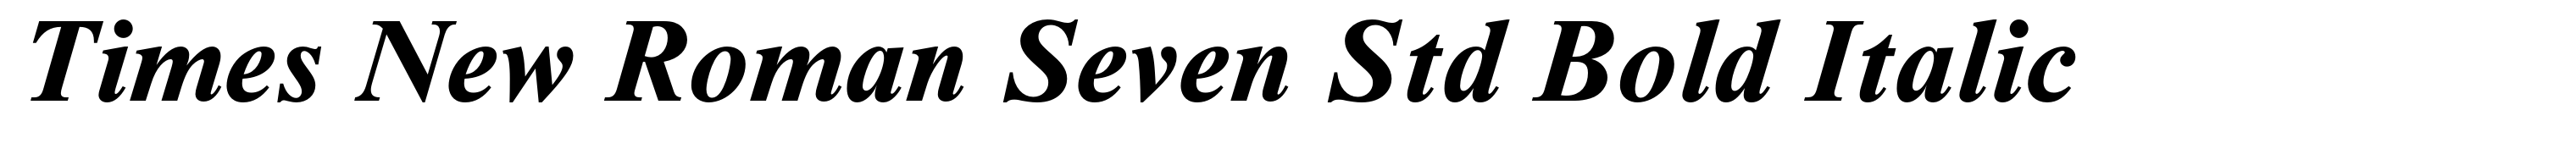 Times New Roman Seven Std Bold Italic